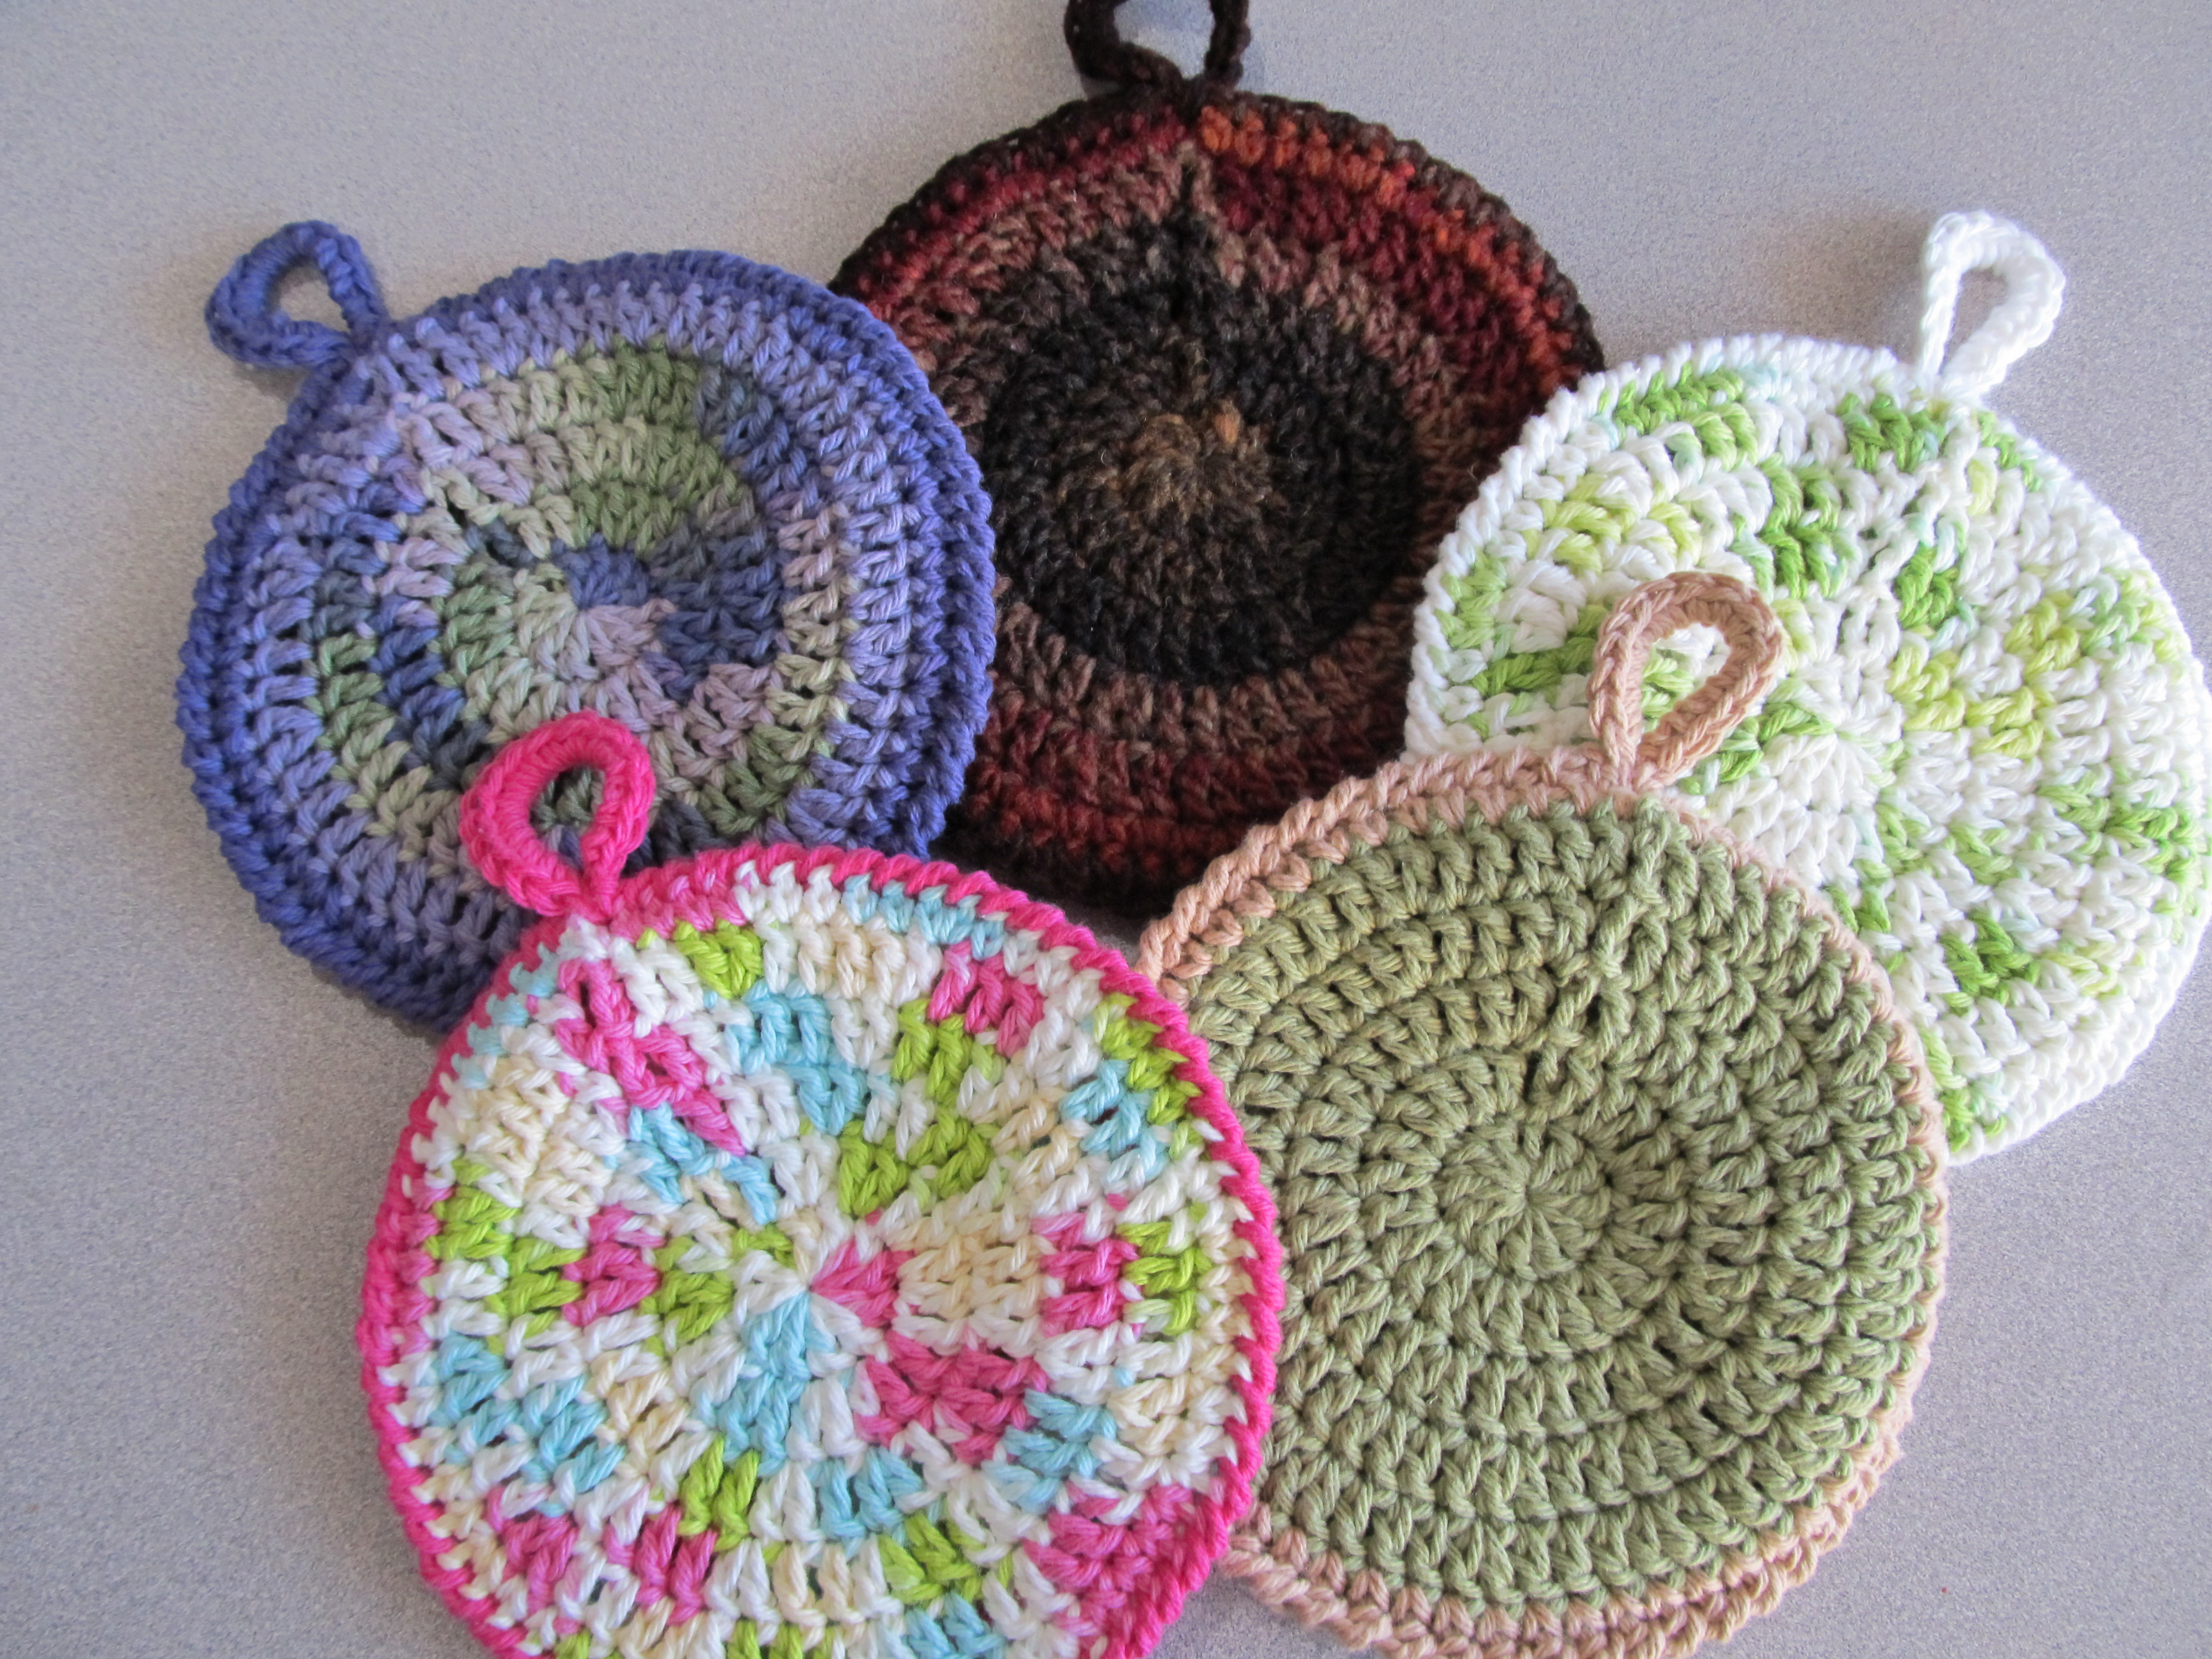 Thick Crochet Potholder Pattern Circular Potholders The Caped Crocheter